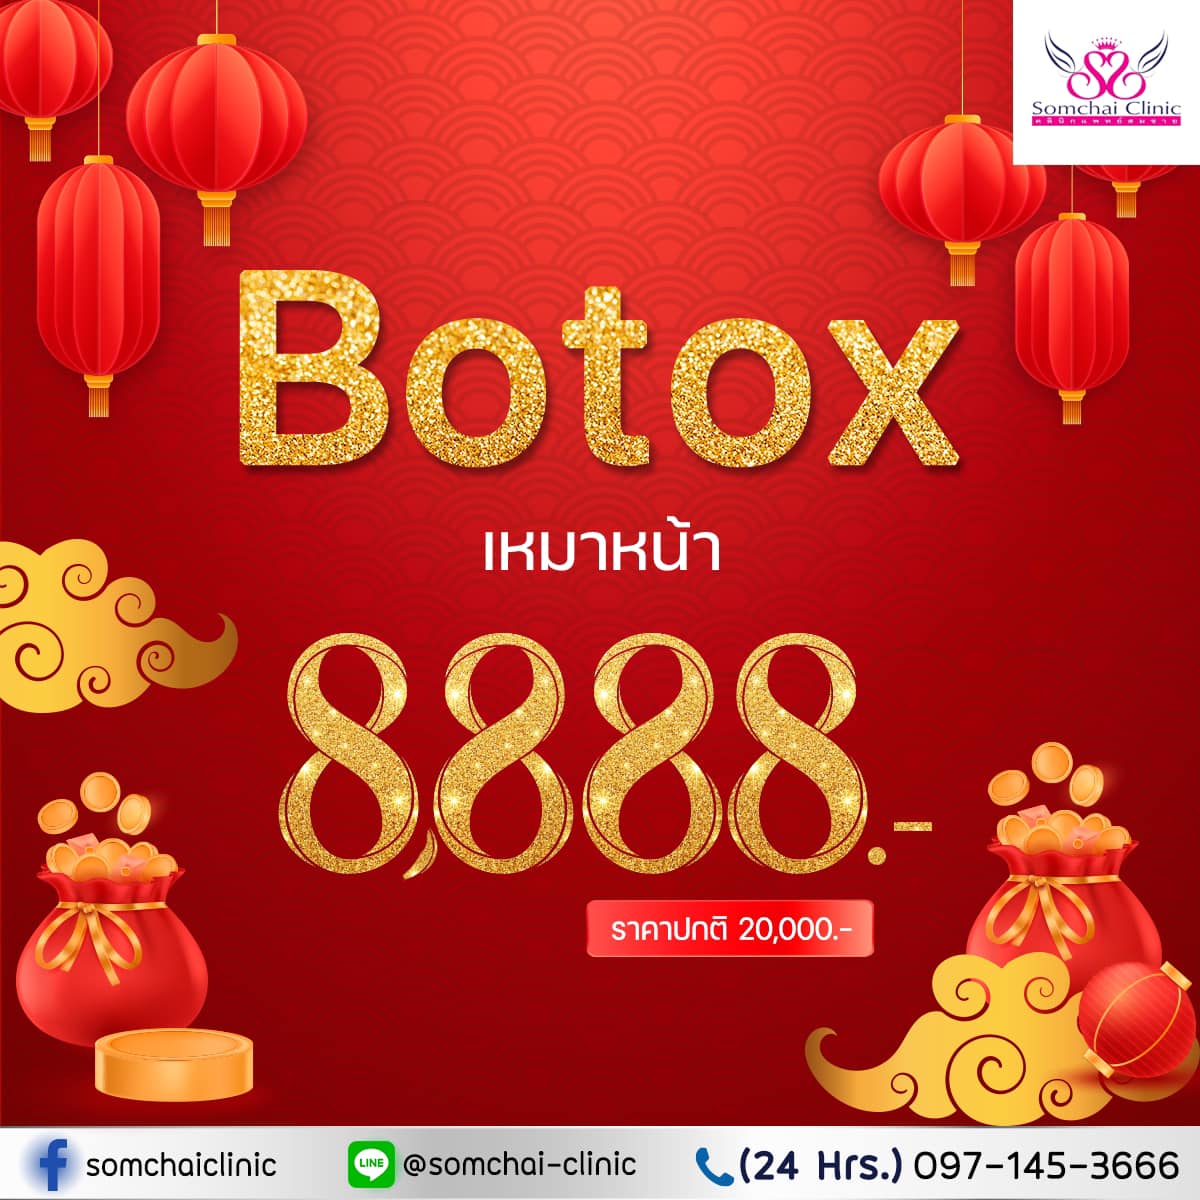 Proตรุษจีน-Botox-SomchaiClinic